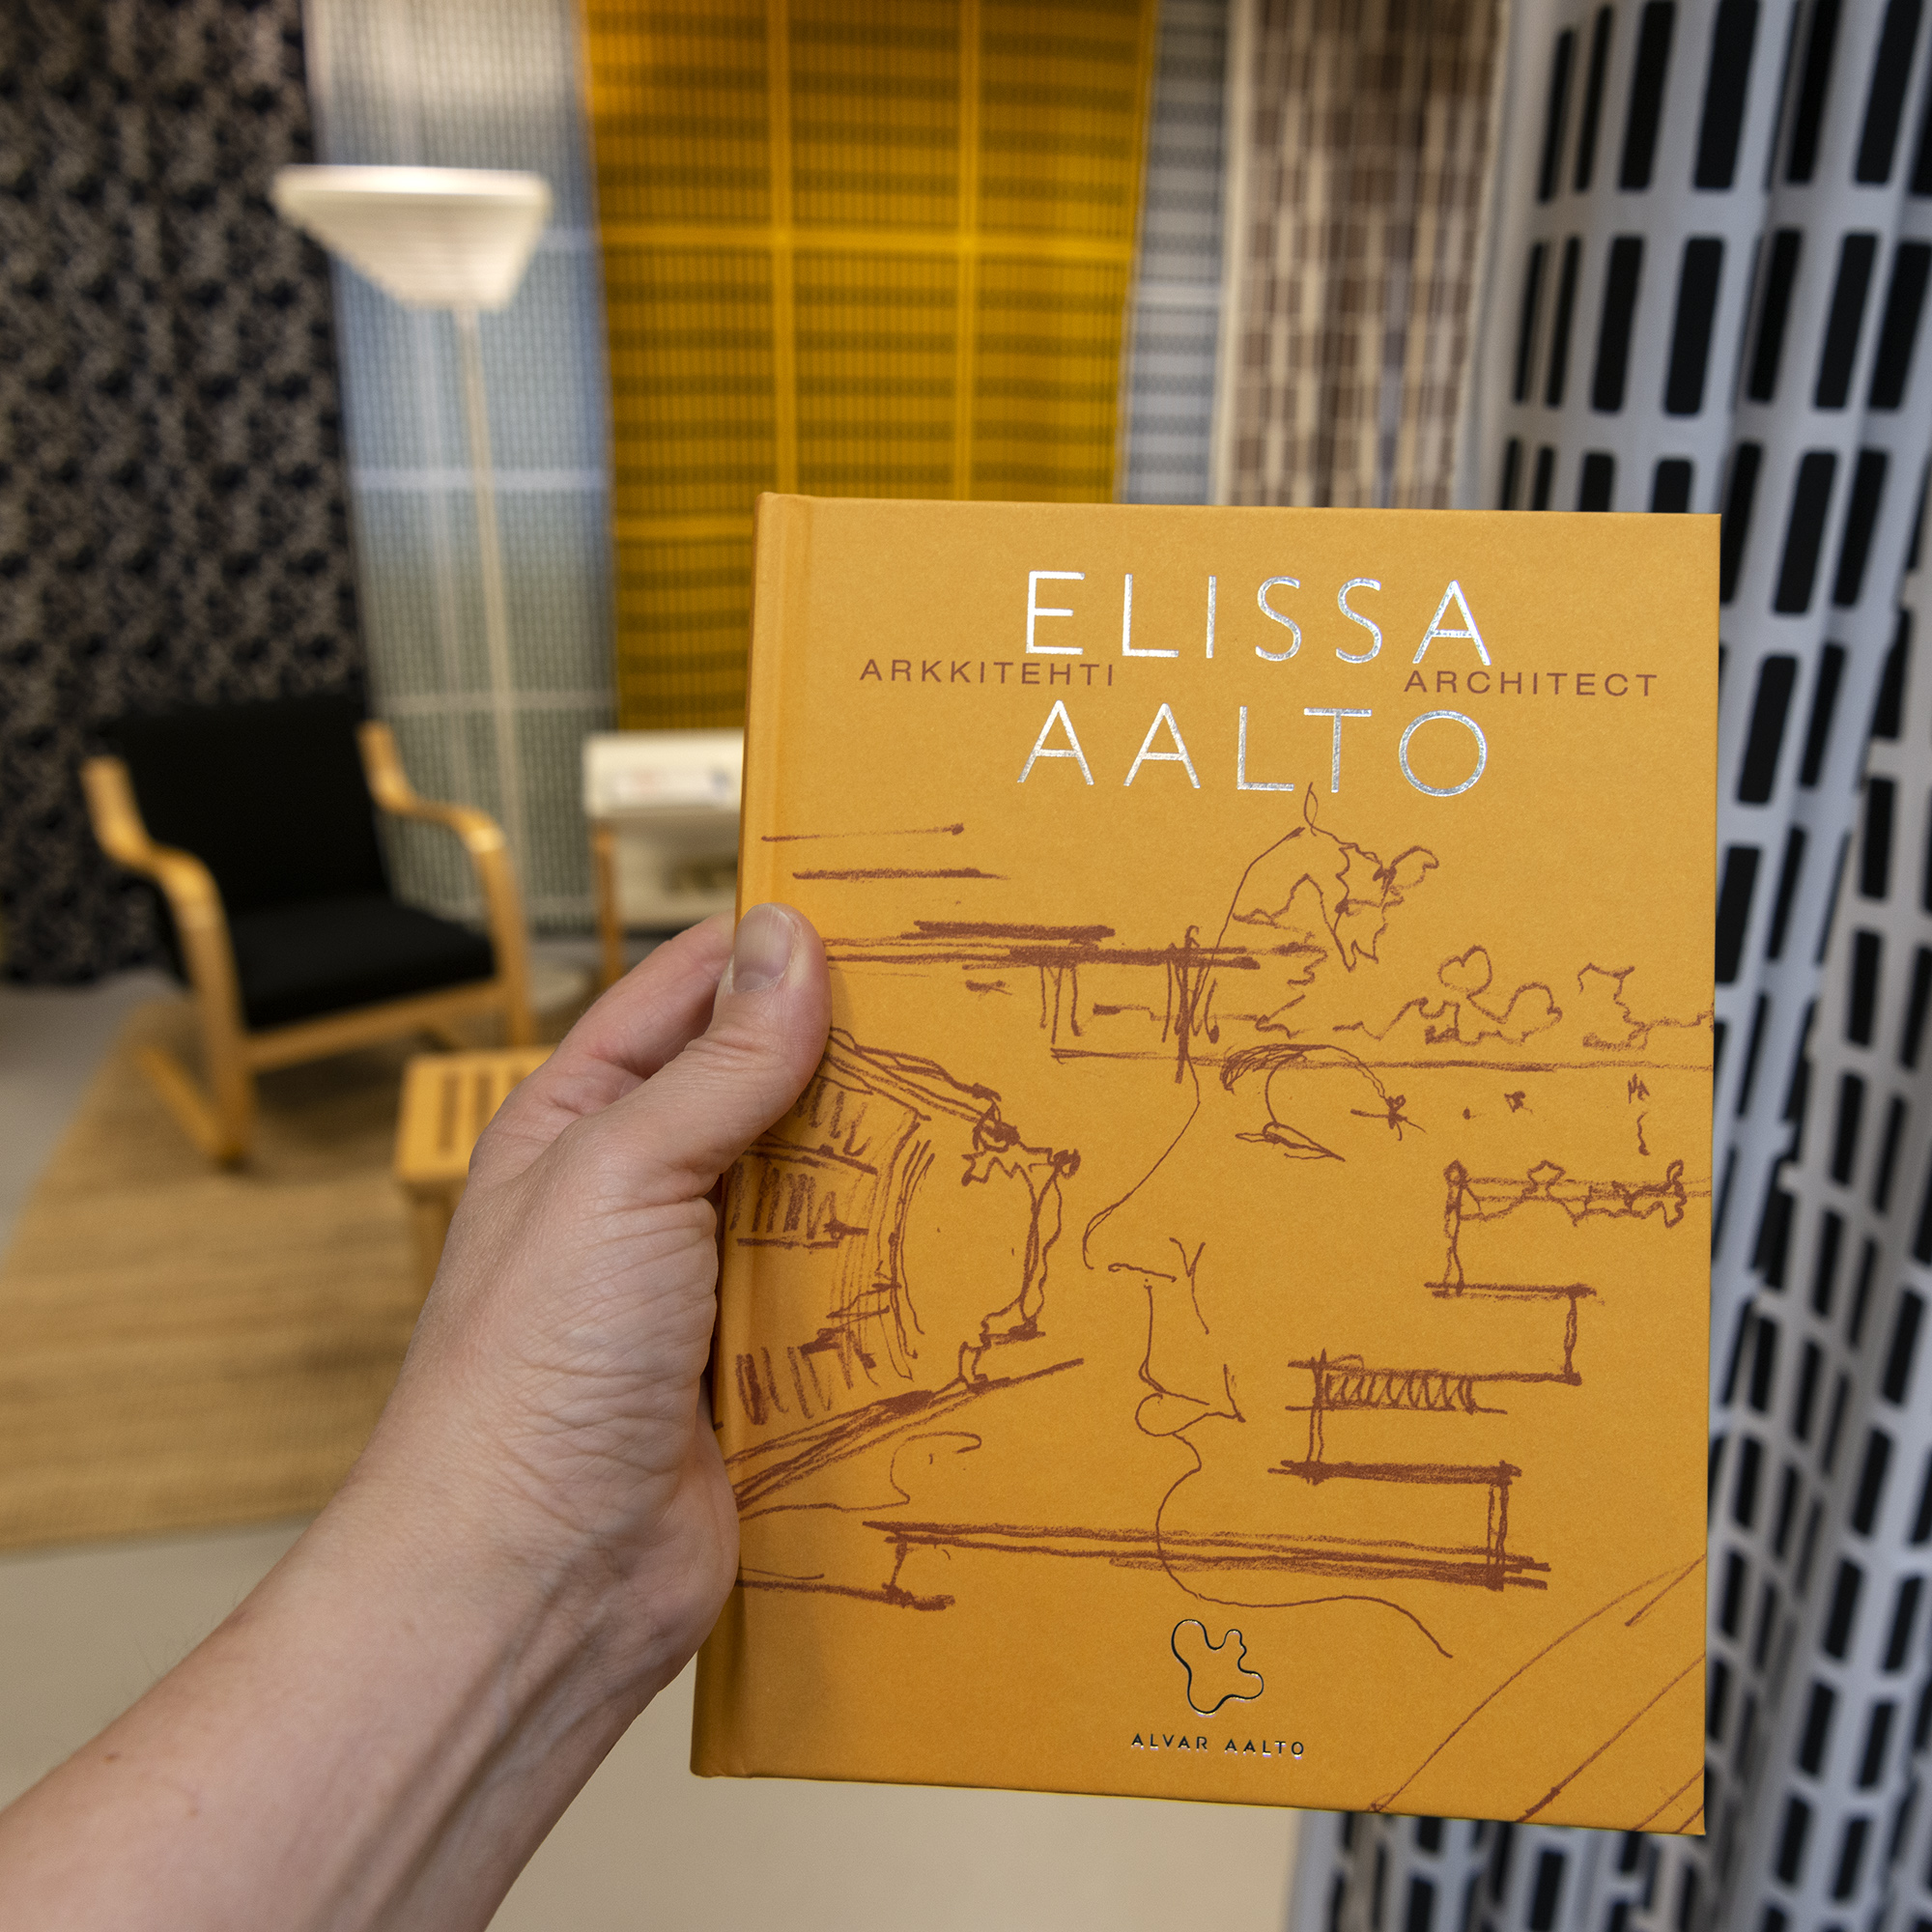 Cover of book "Architect Elissa Aalto"